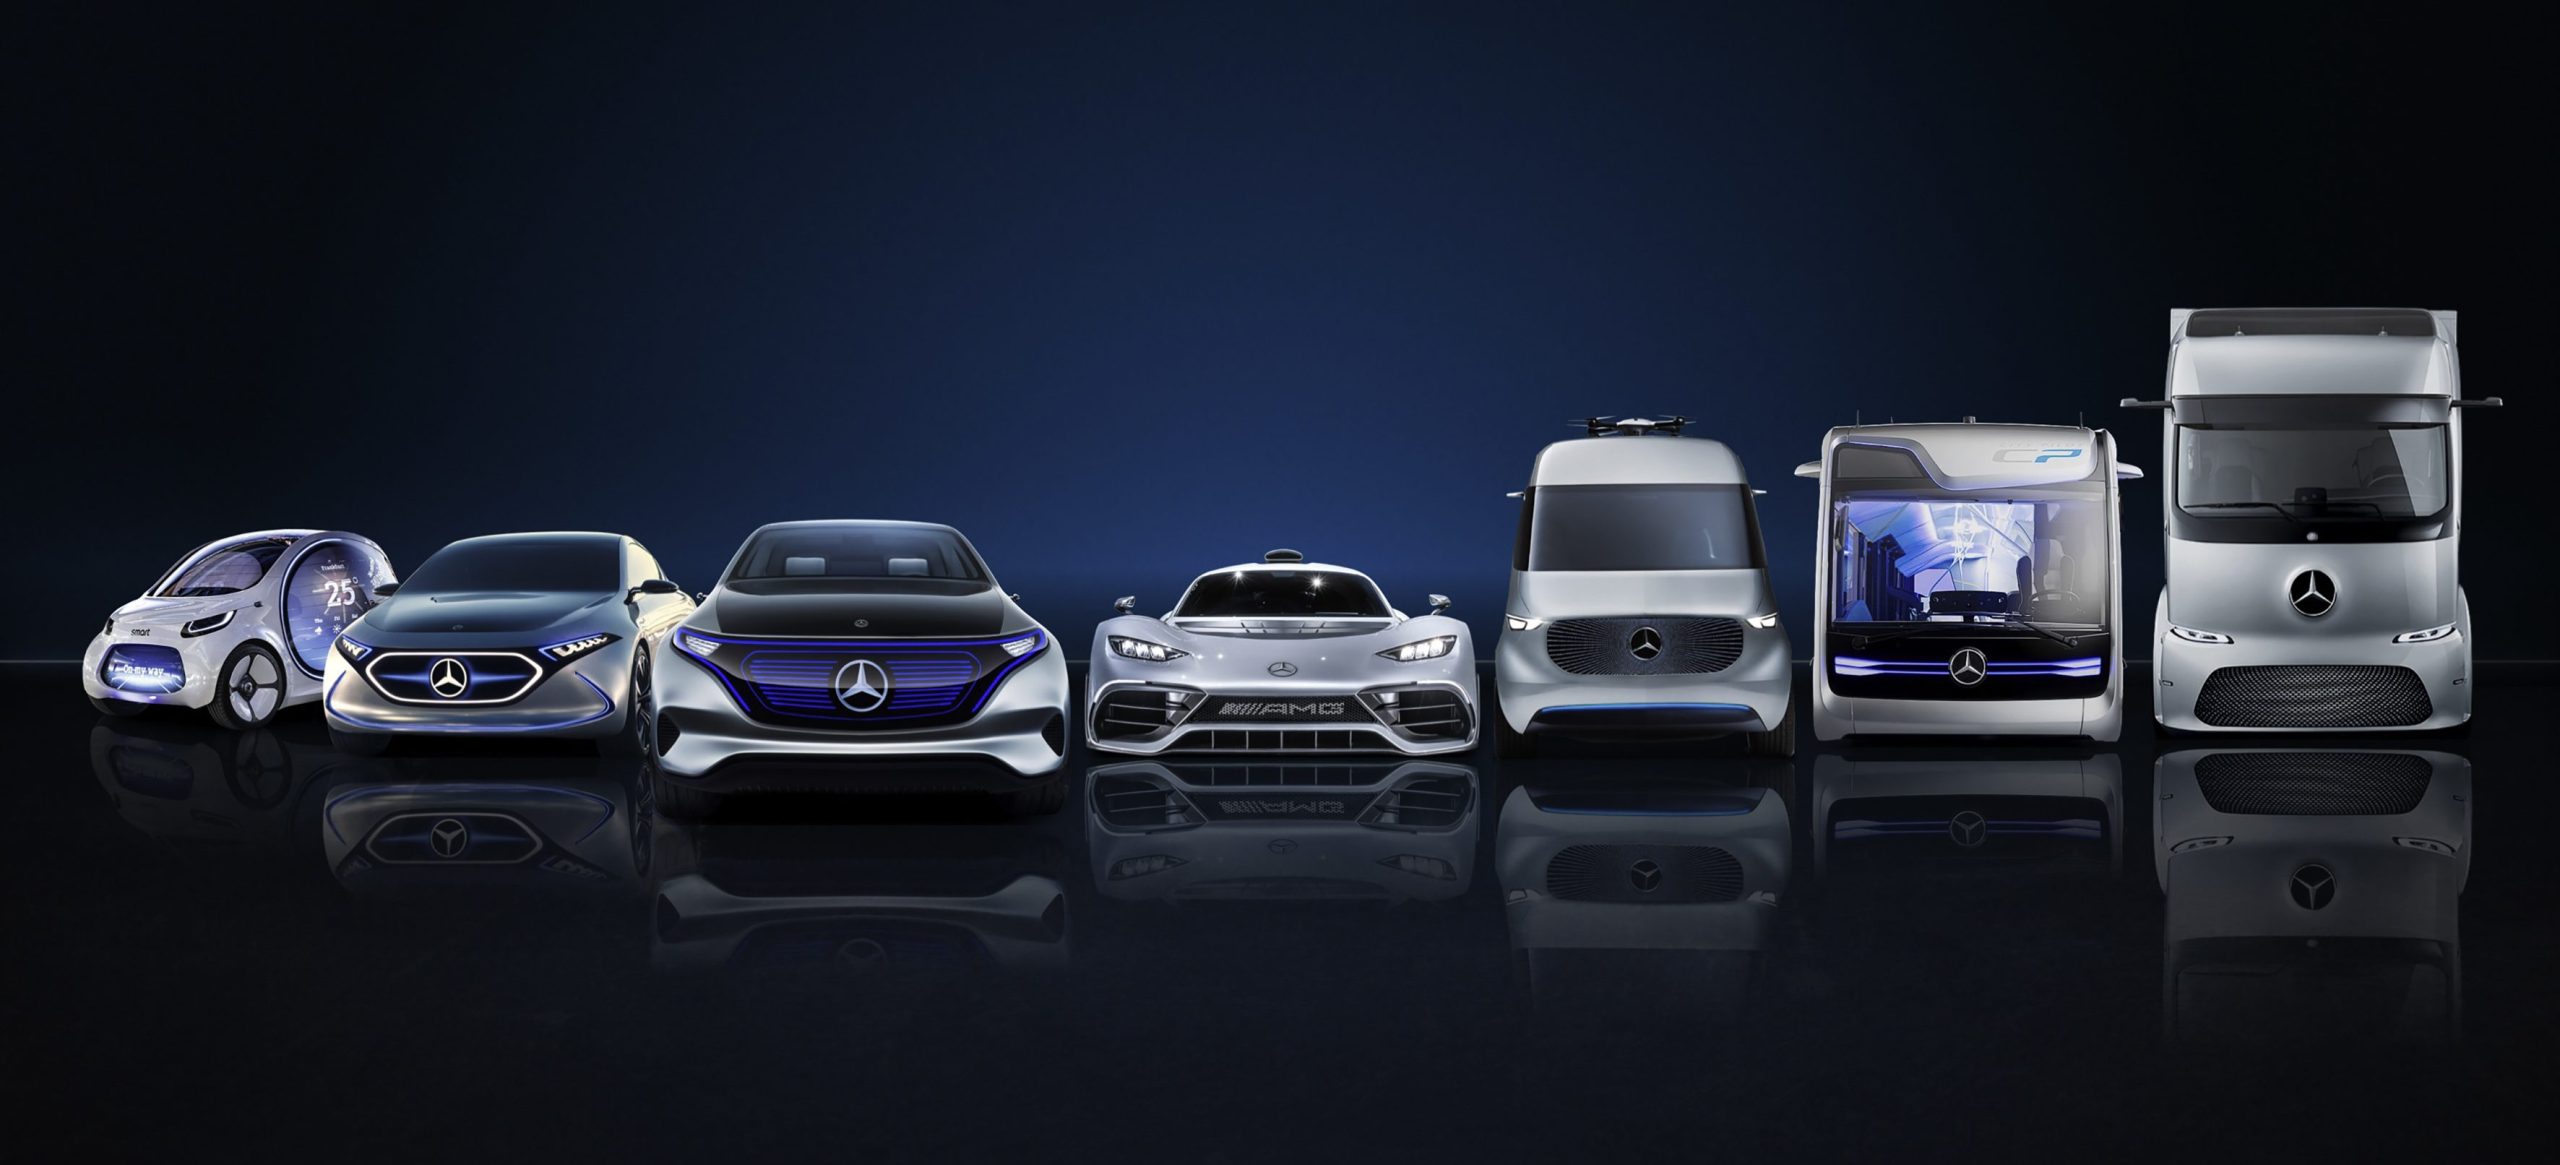 Daimler najavljuje ulaganje od 85,000 milijardi dolara za ubrzanje elektrifikacije svojih vozila.